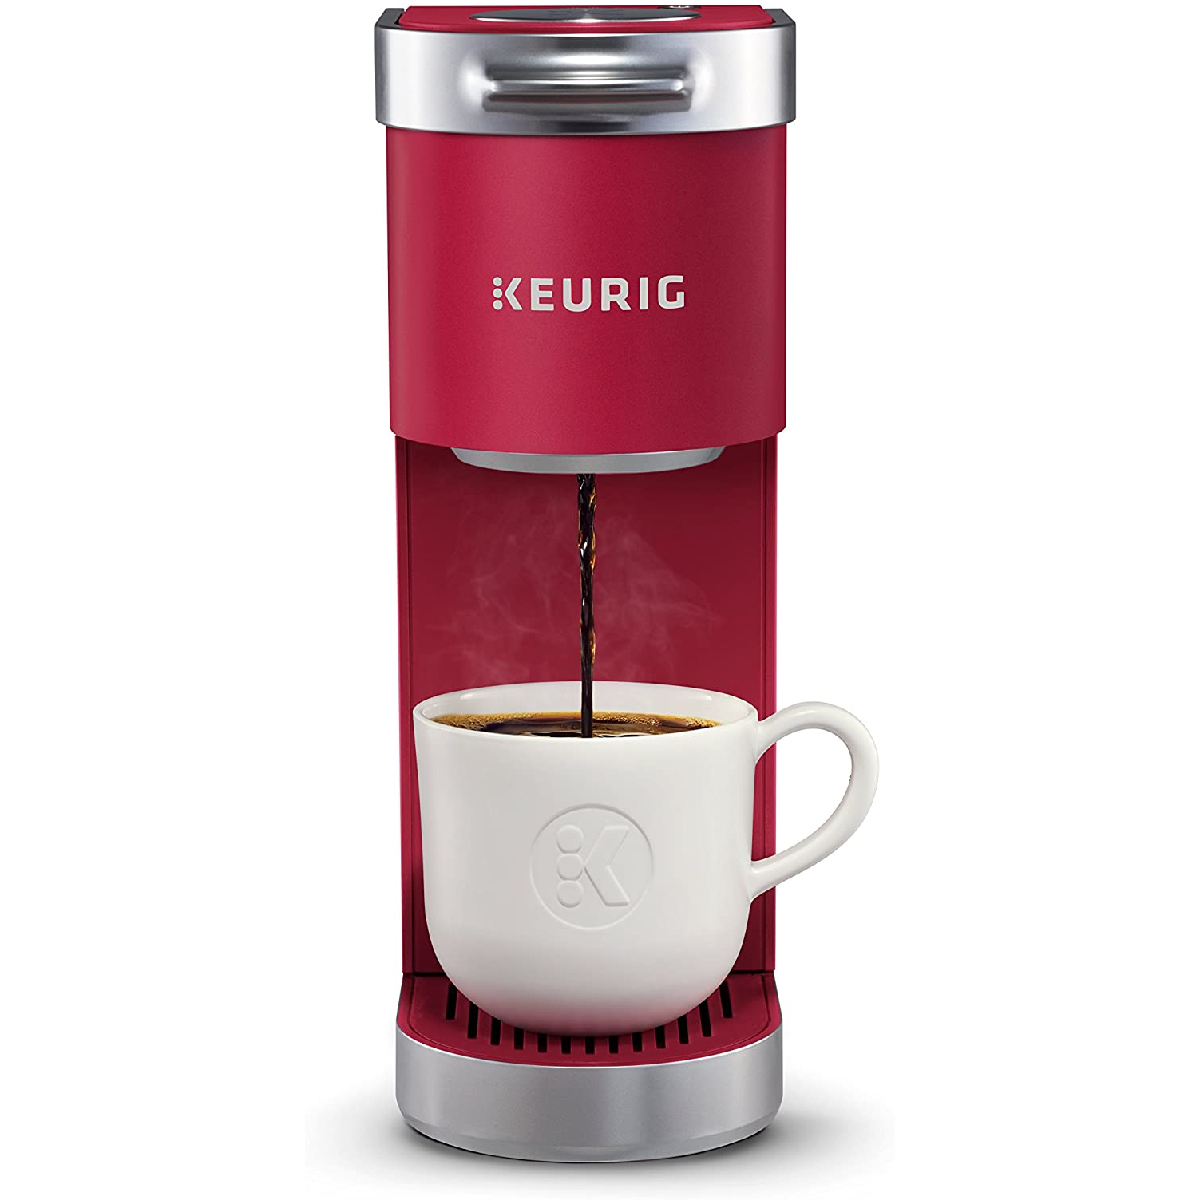 Keurig Plus Single Serve K-Mini Coffee Maker for RV